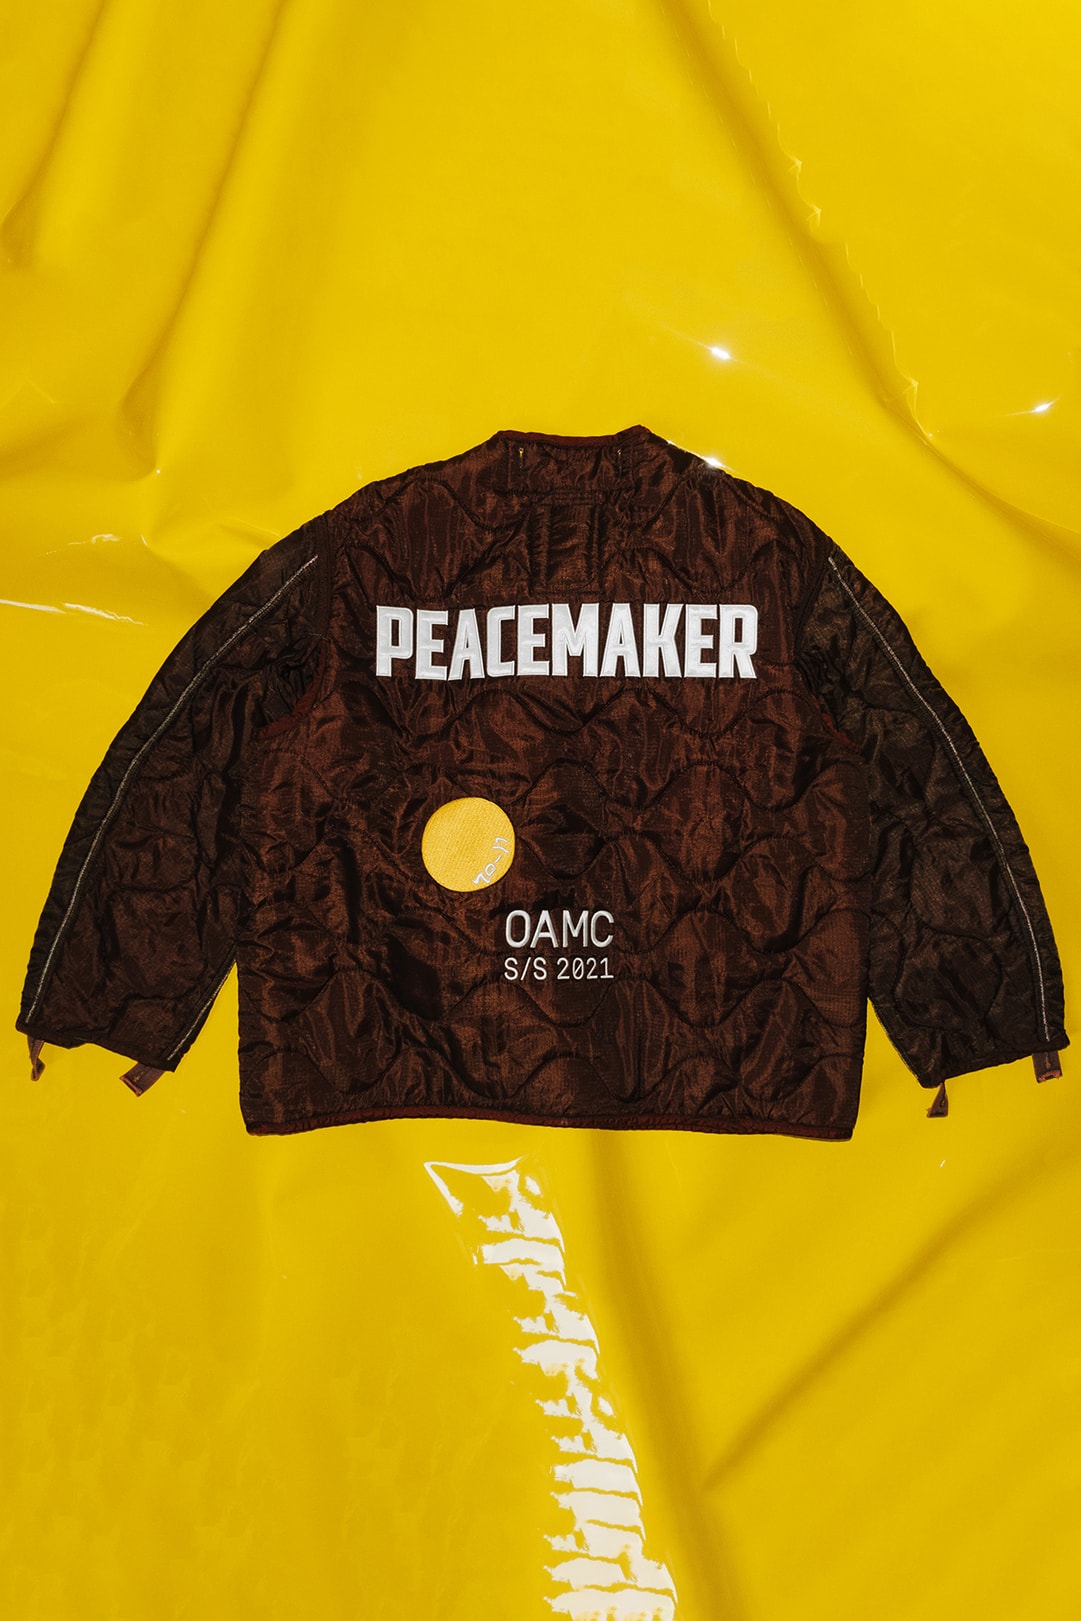 OAMC Peacemaker Liner "DOT" Jacket Drop 2 Spring/Summer 2021 SS22 John Baldessari M-65 Outerwear Luke Meier Release Information